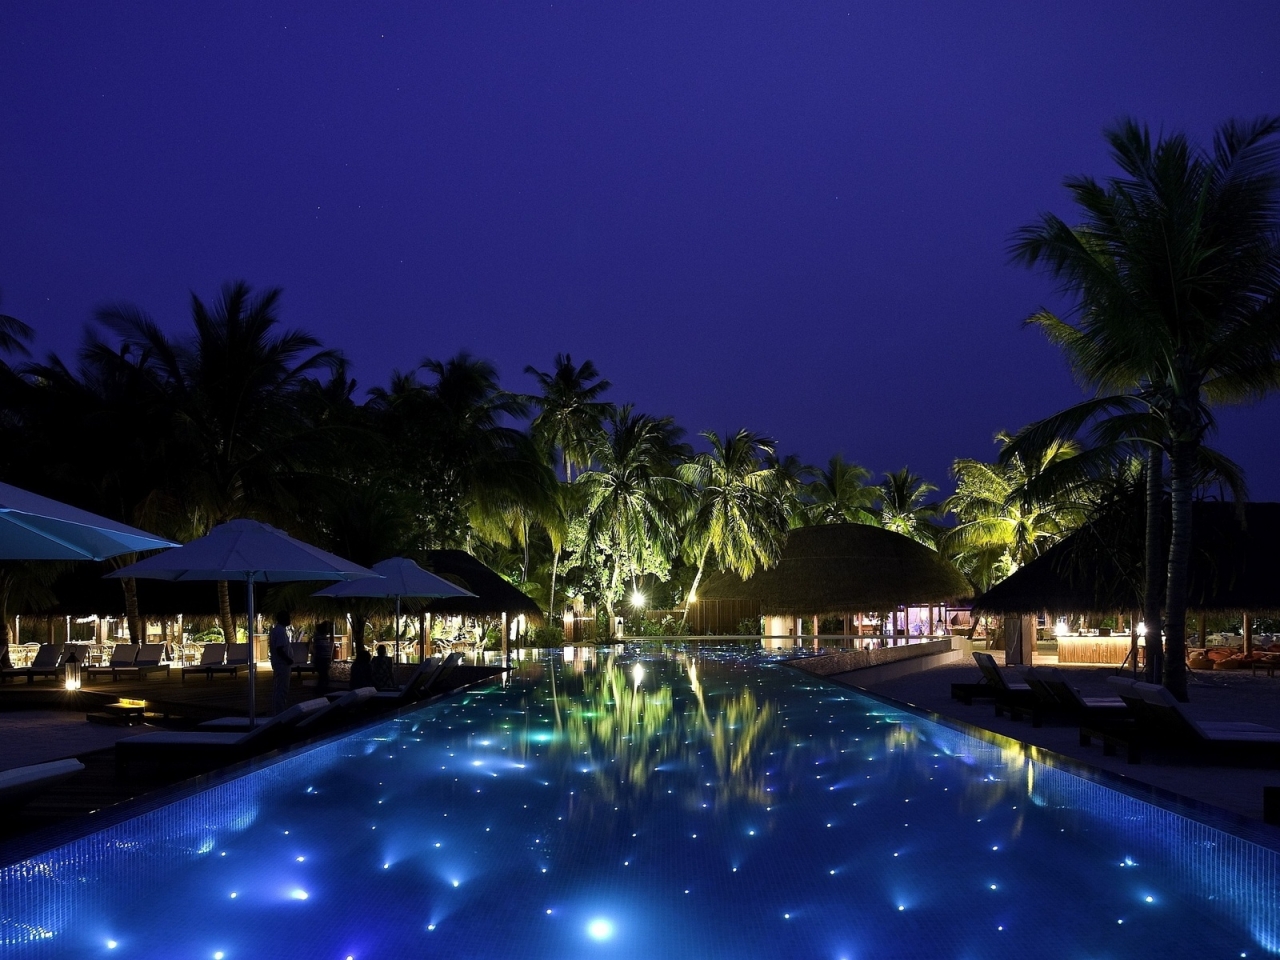 Resort Night View for 1280 x 960 resolution